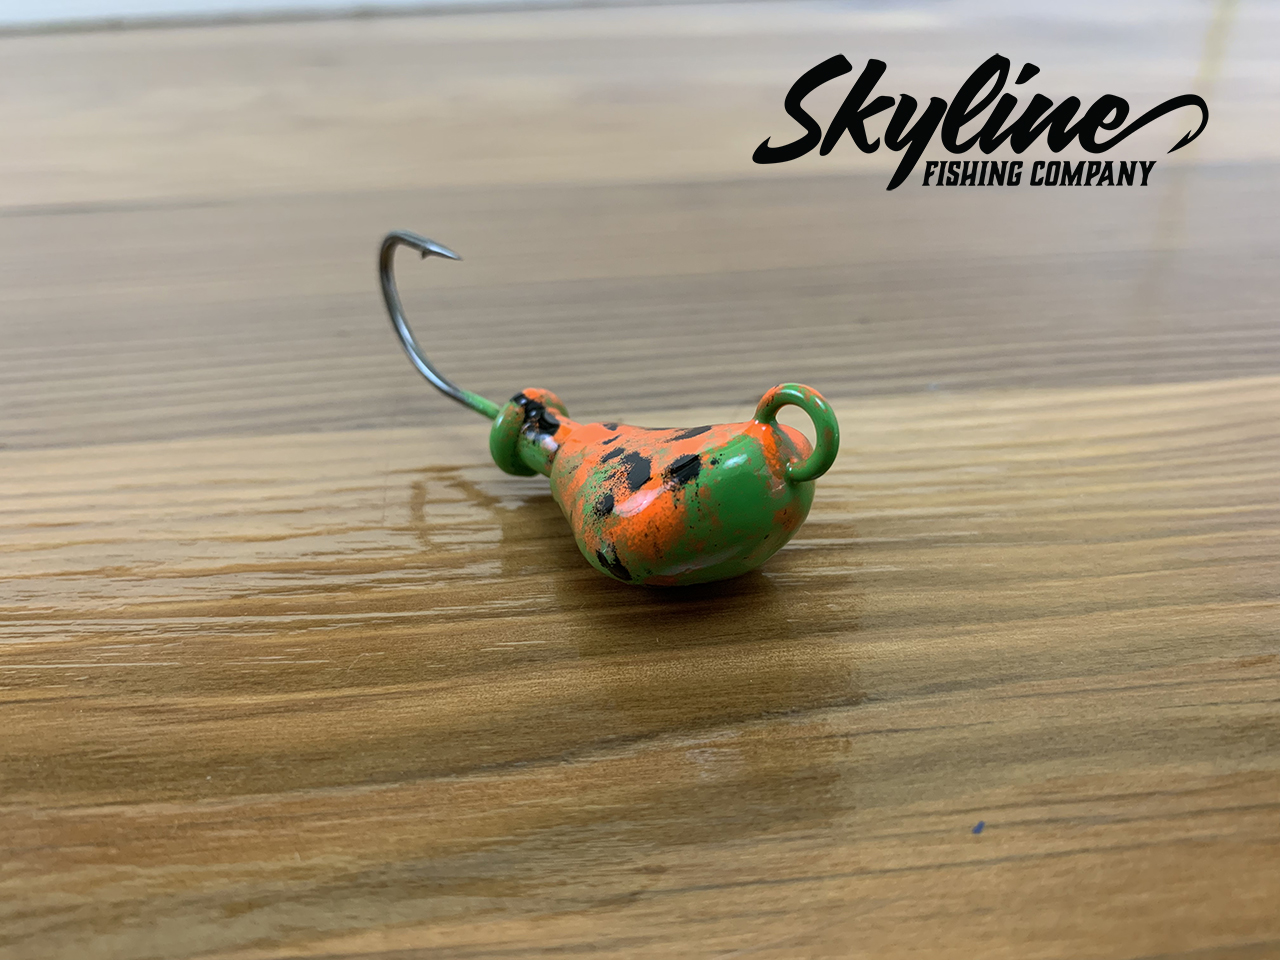 Skyline Tear Drop Bucktail Jigs - Skyline Fishing Company